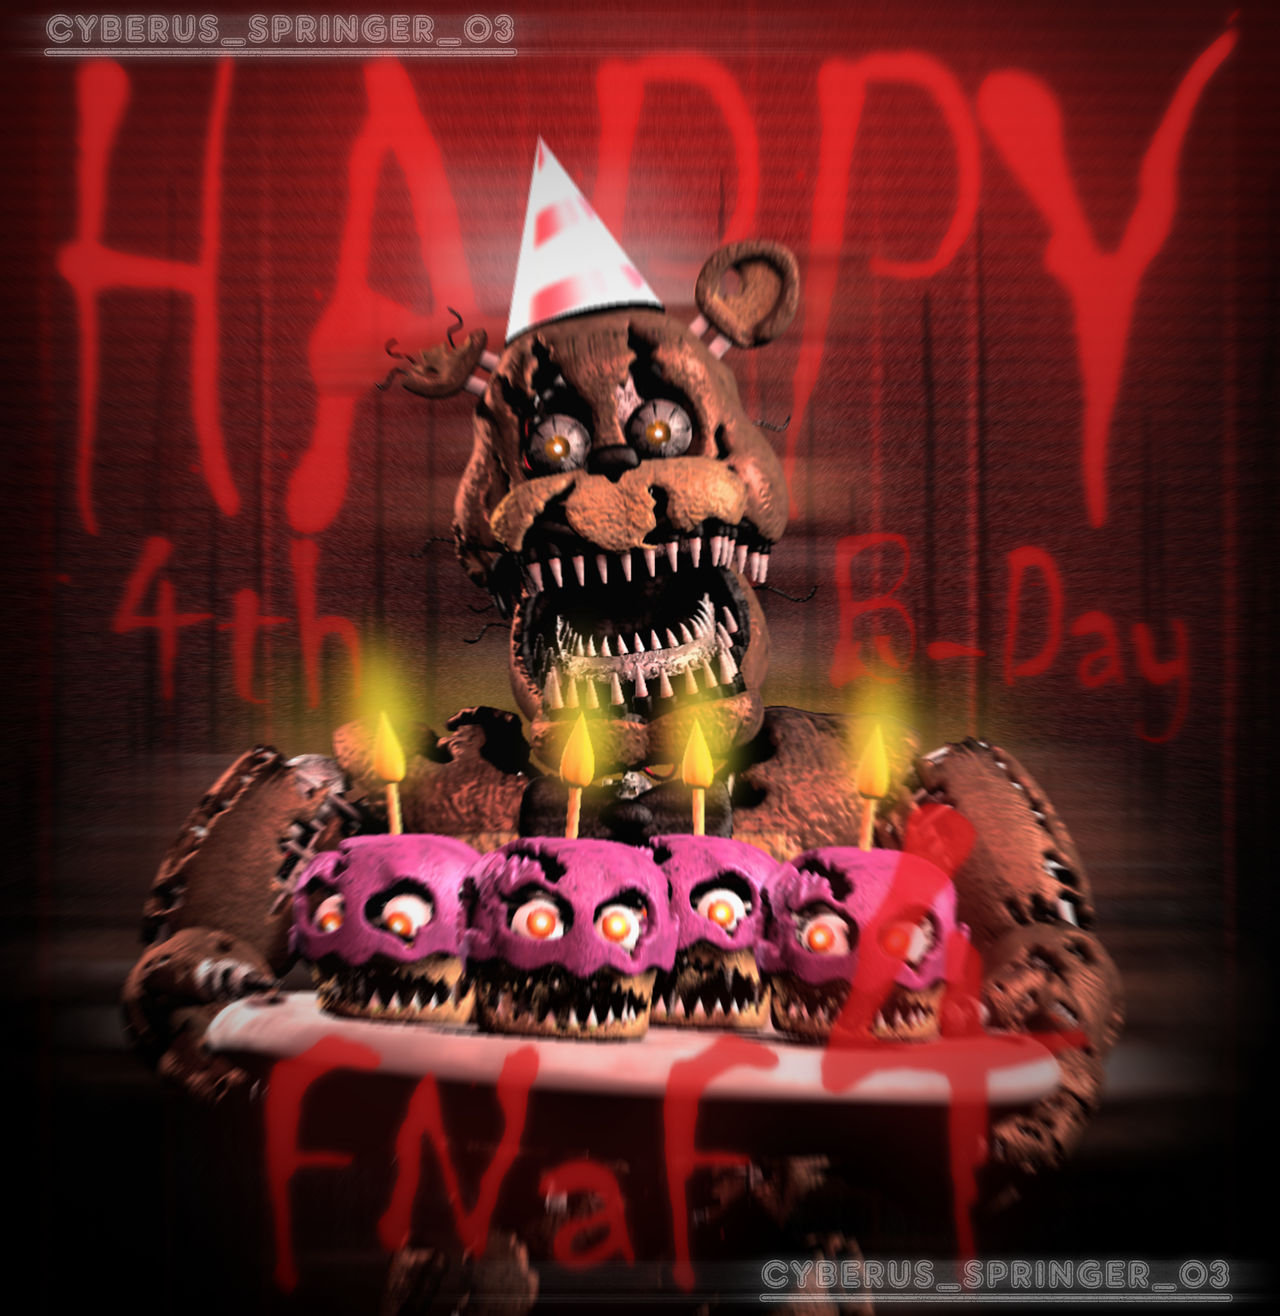 Five Nights At Freddy's 4 Remake (HAPPY BIRTHDAY FNAF 4!) 